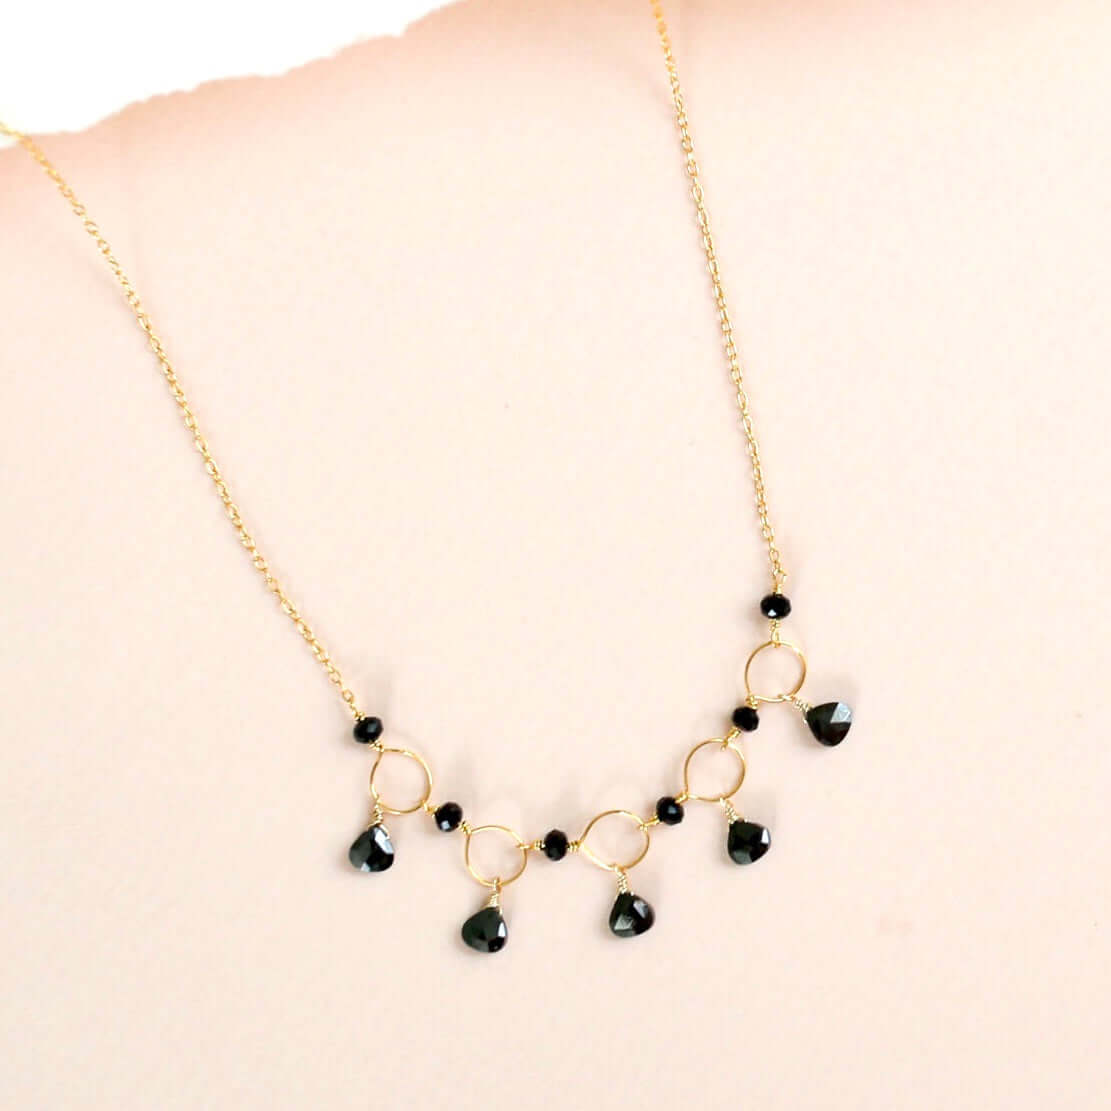 Adjustable Black Spinel Gemstone Gold  Chain Necklace